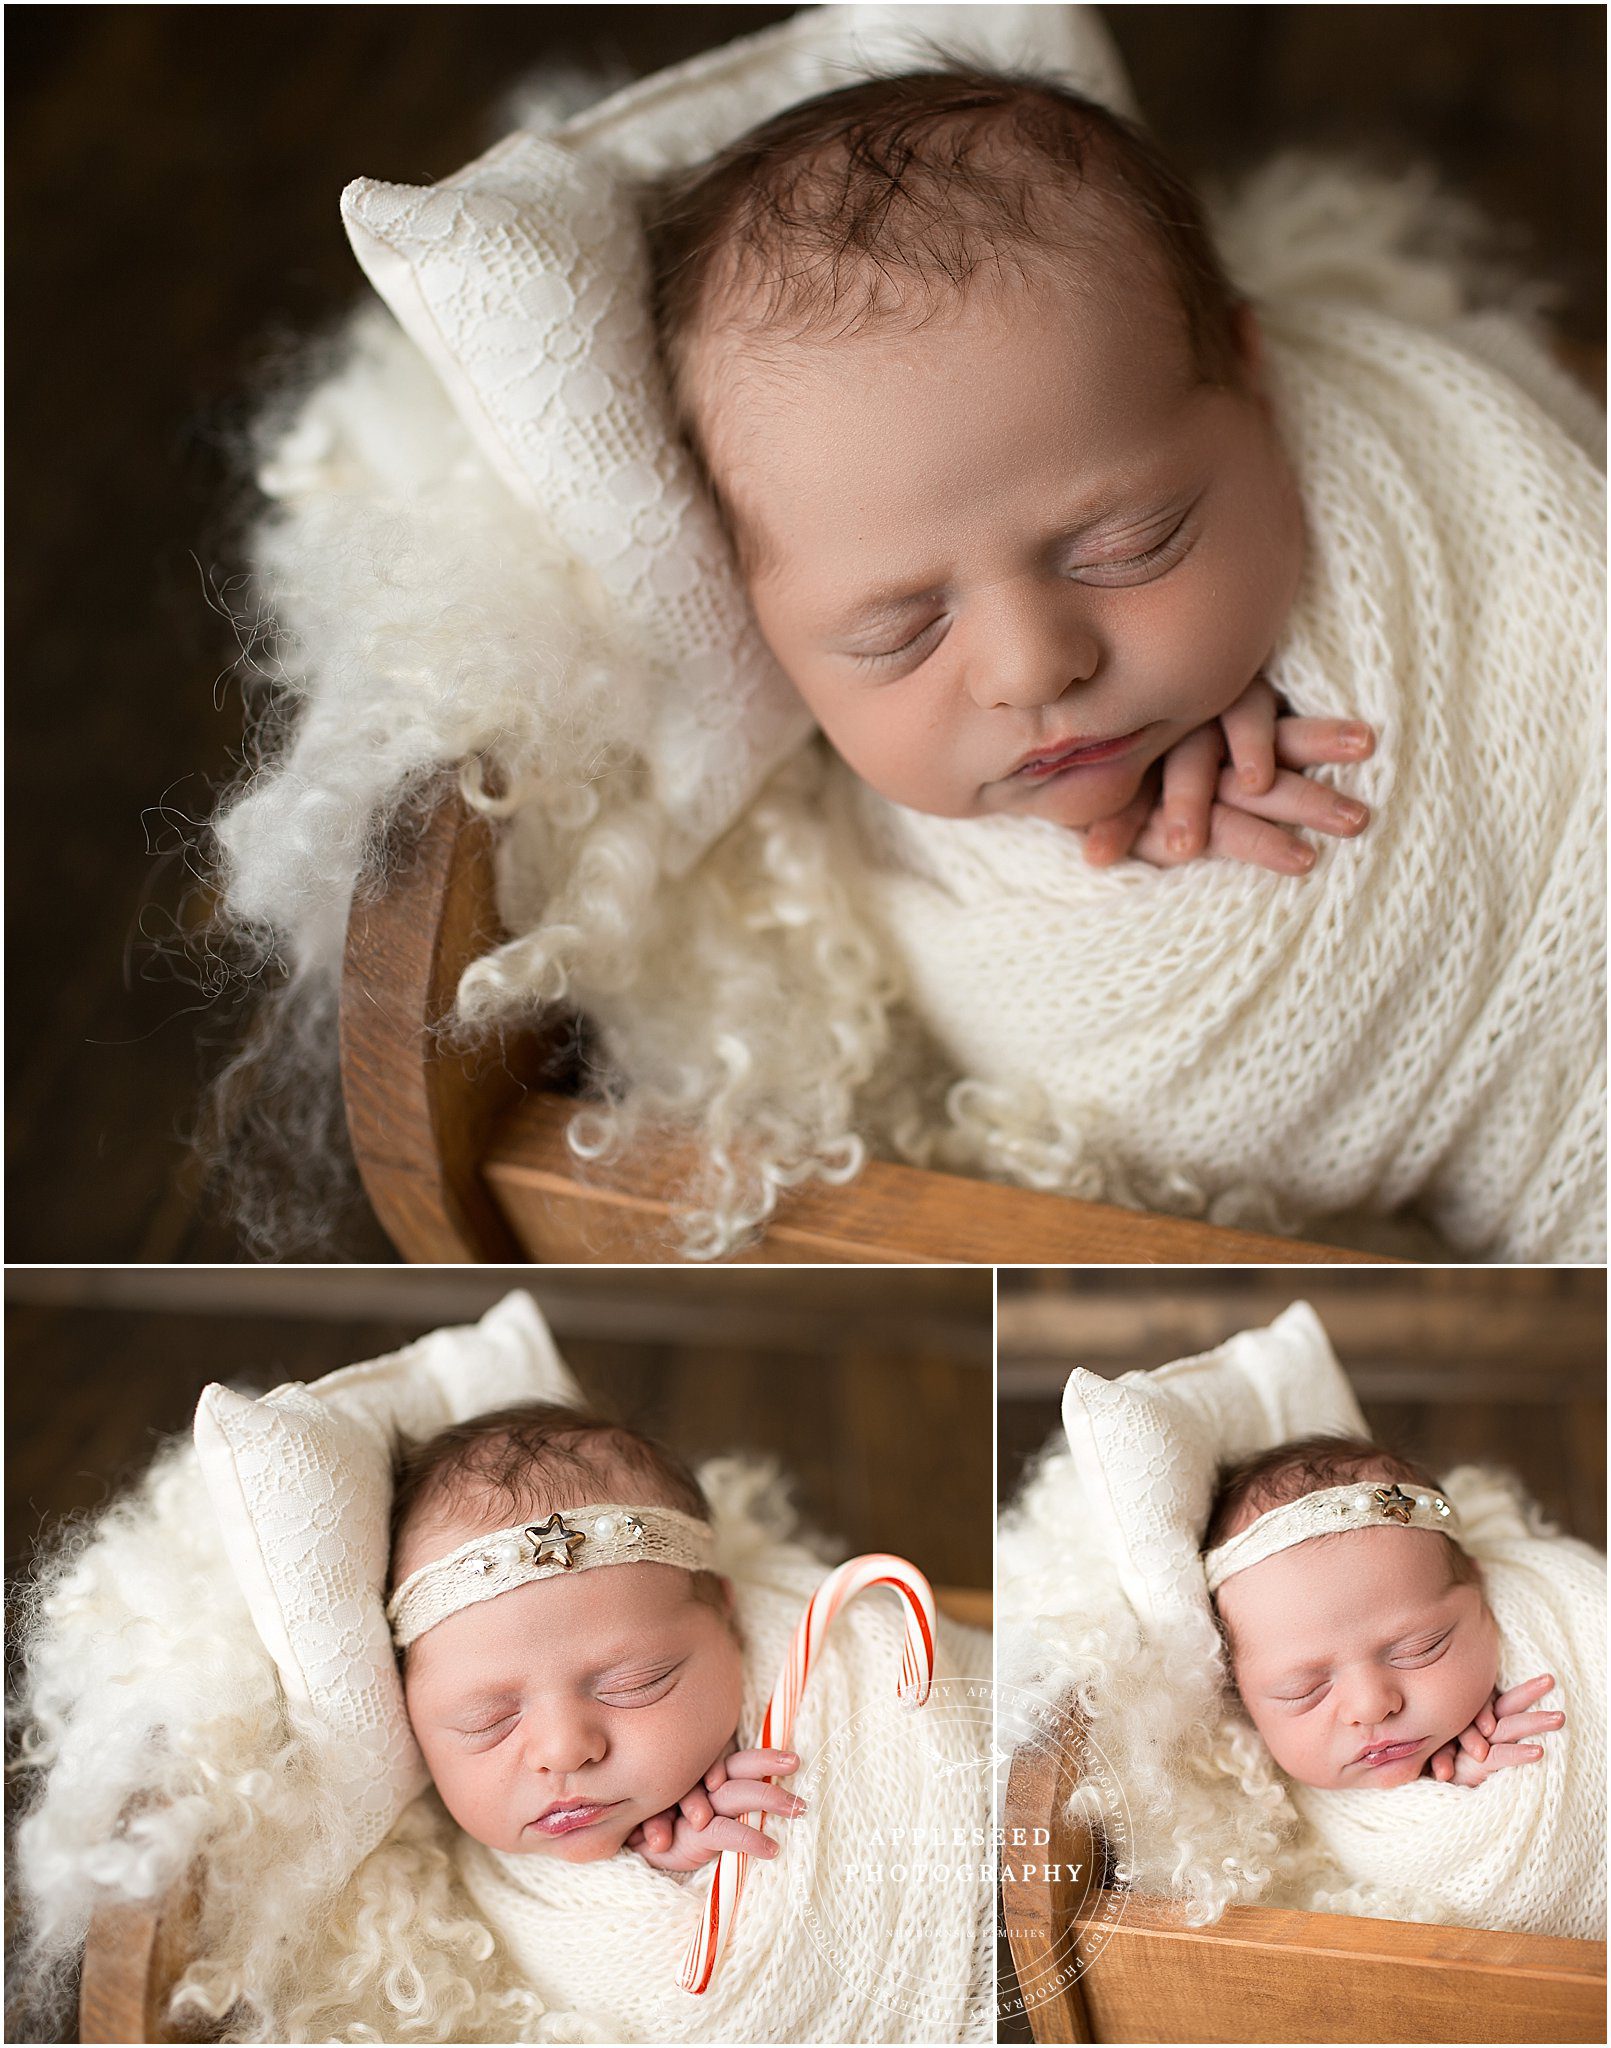 Elise | Atlanta Newborn Photographer | Appleseed Photography